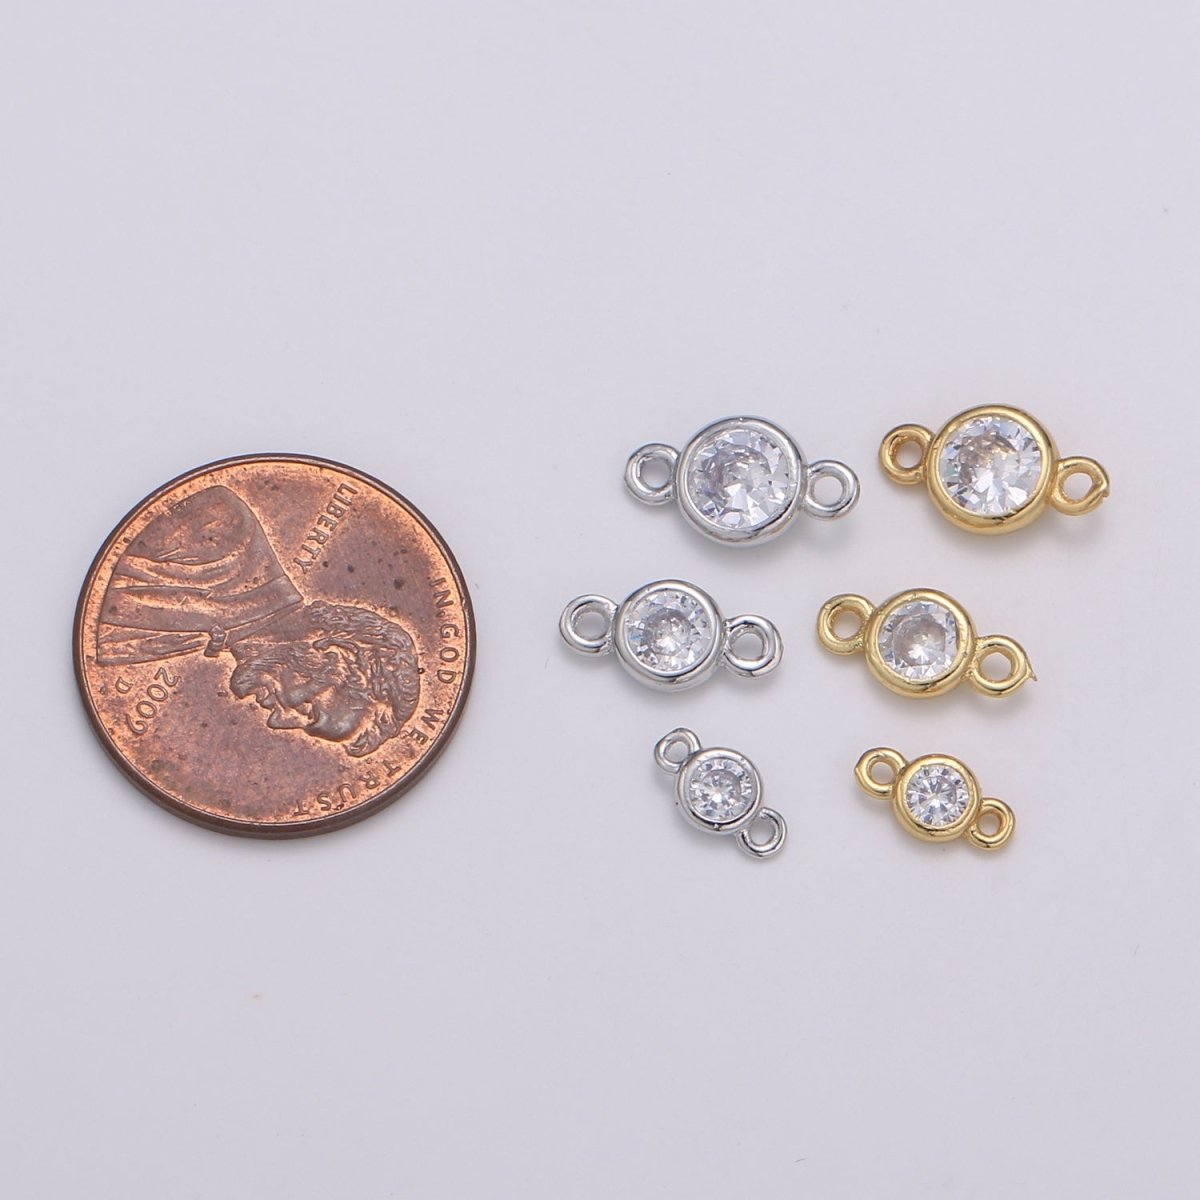 Gold Bezel 4,5,6mm CZ Connector Link 14k gold filled, Silver bezel set cubic zirconia link spacer for Necklace Bracelet Earring Supply F-586 to F-591 - DLUXCA